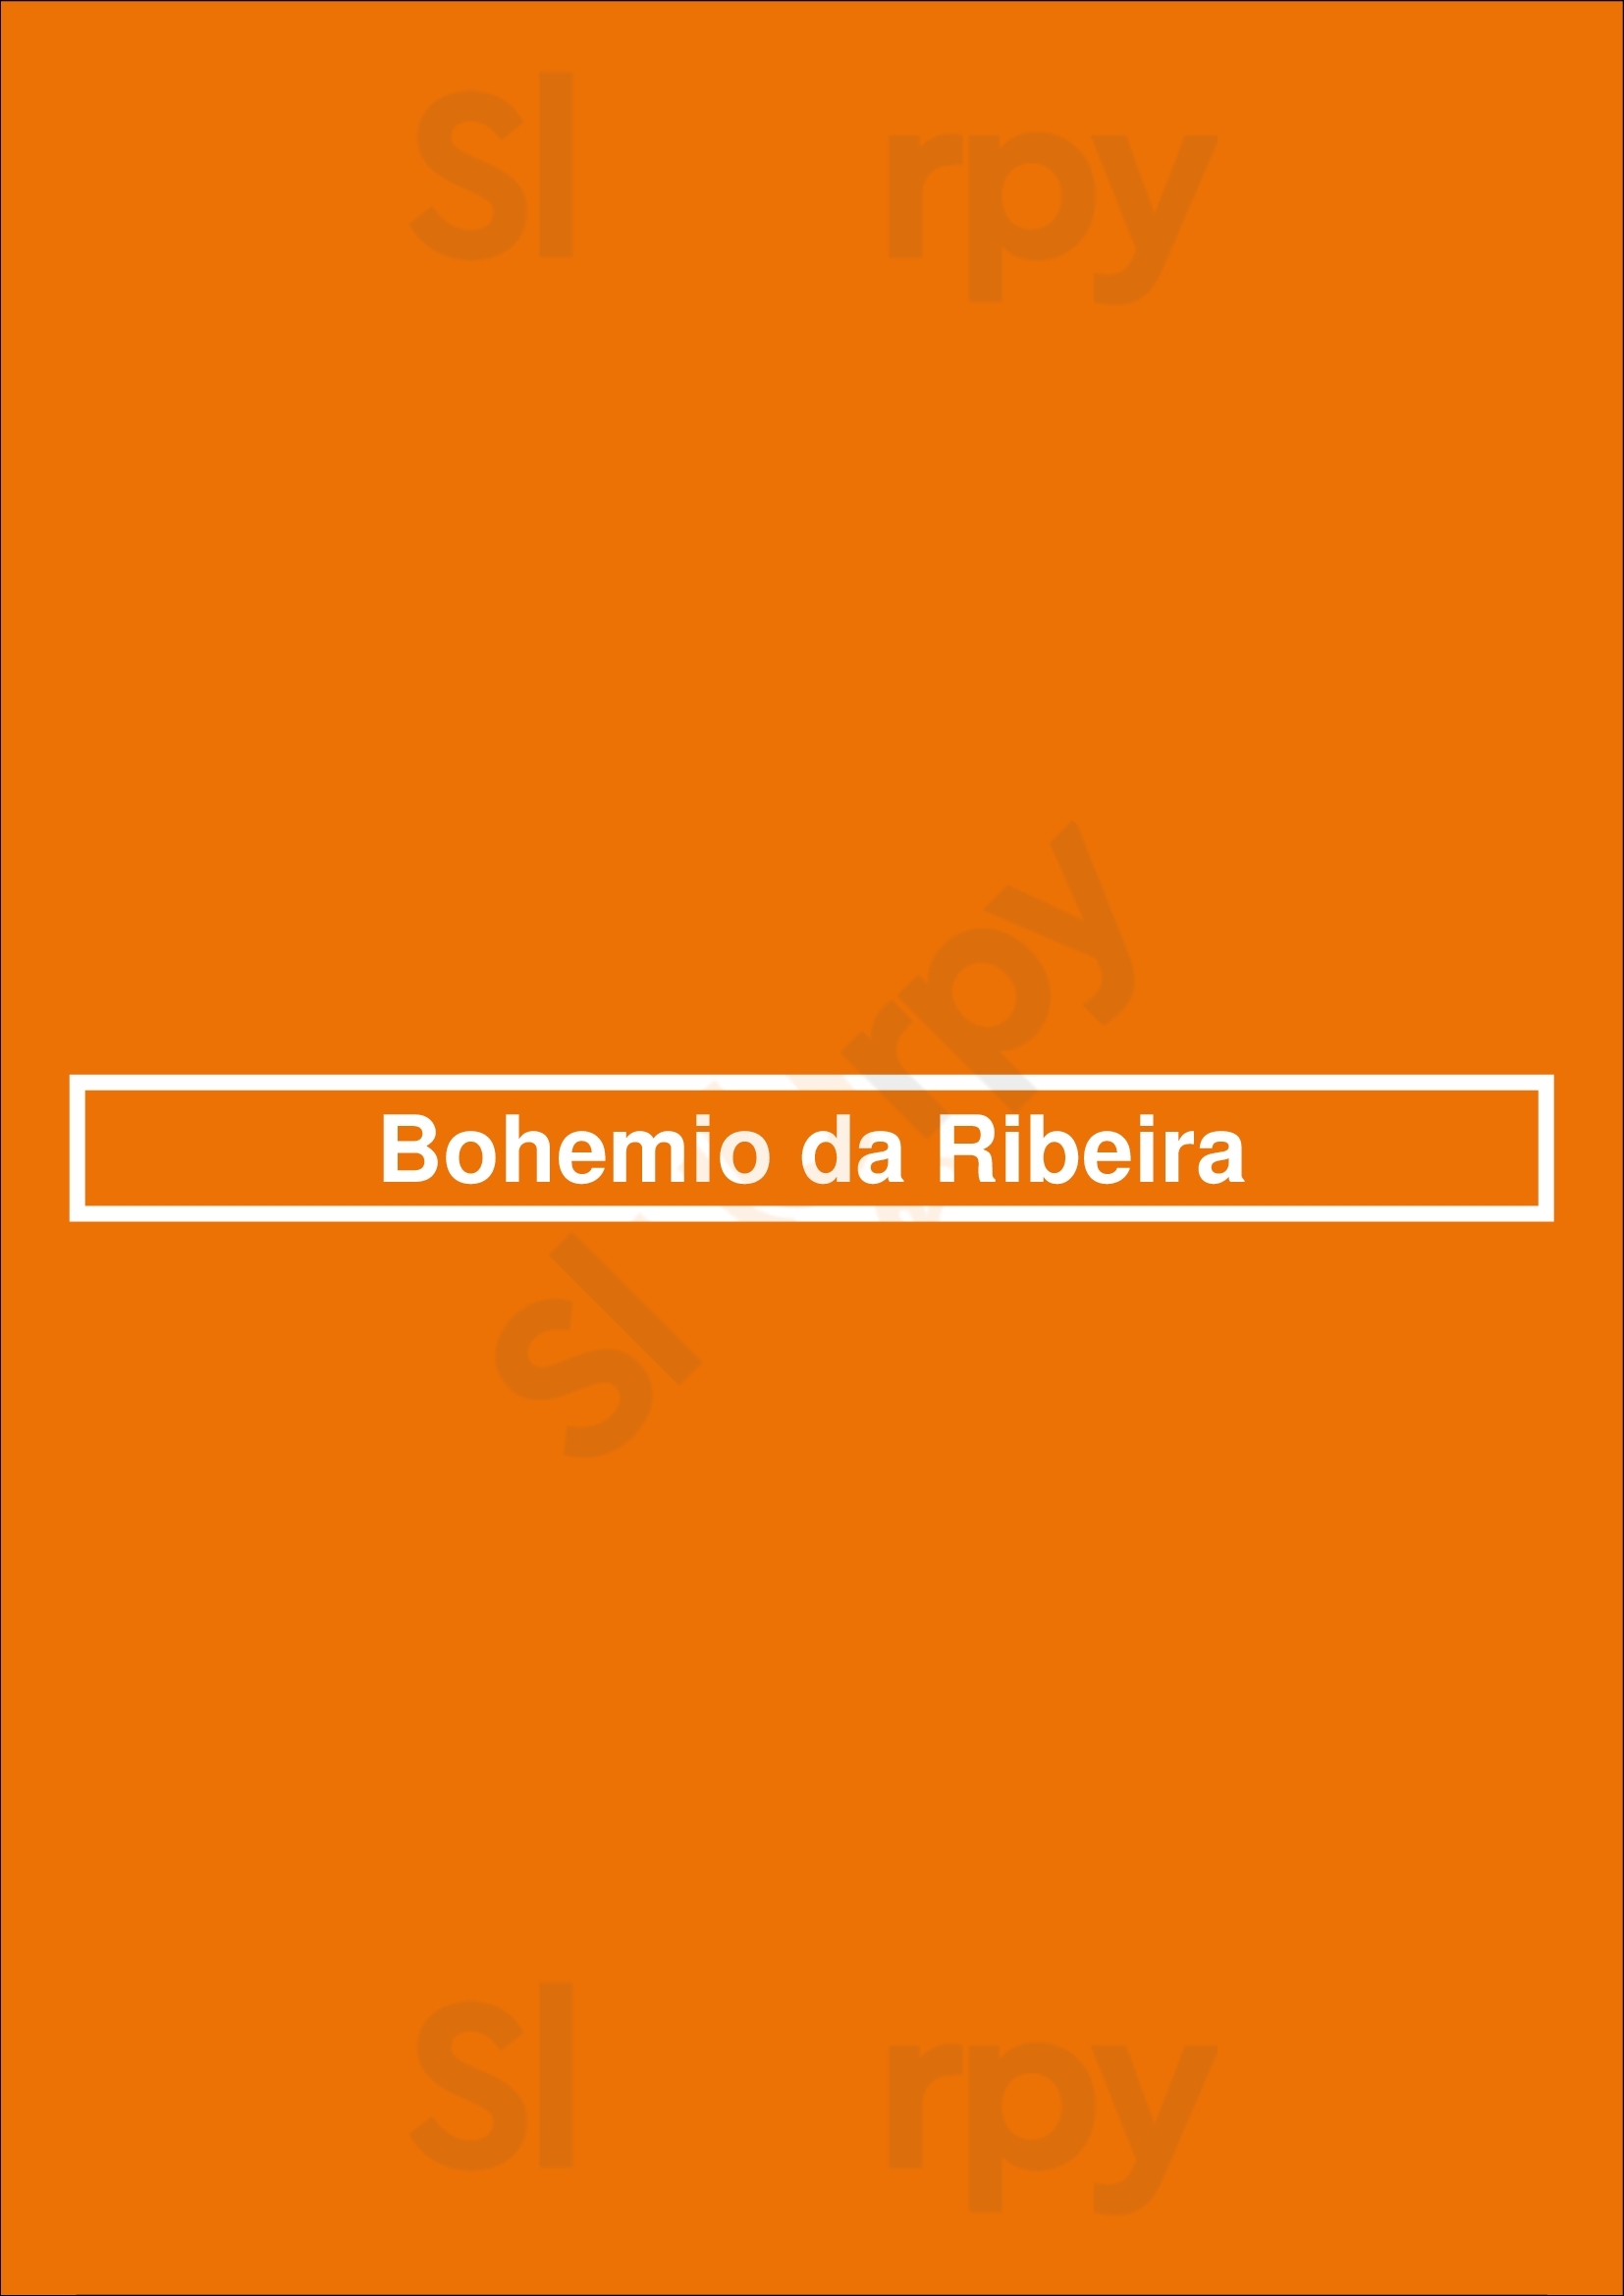 Bohemio Da Ribeira Lisboa Menu - 1